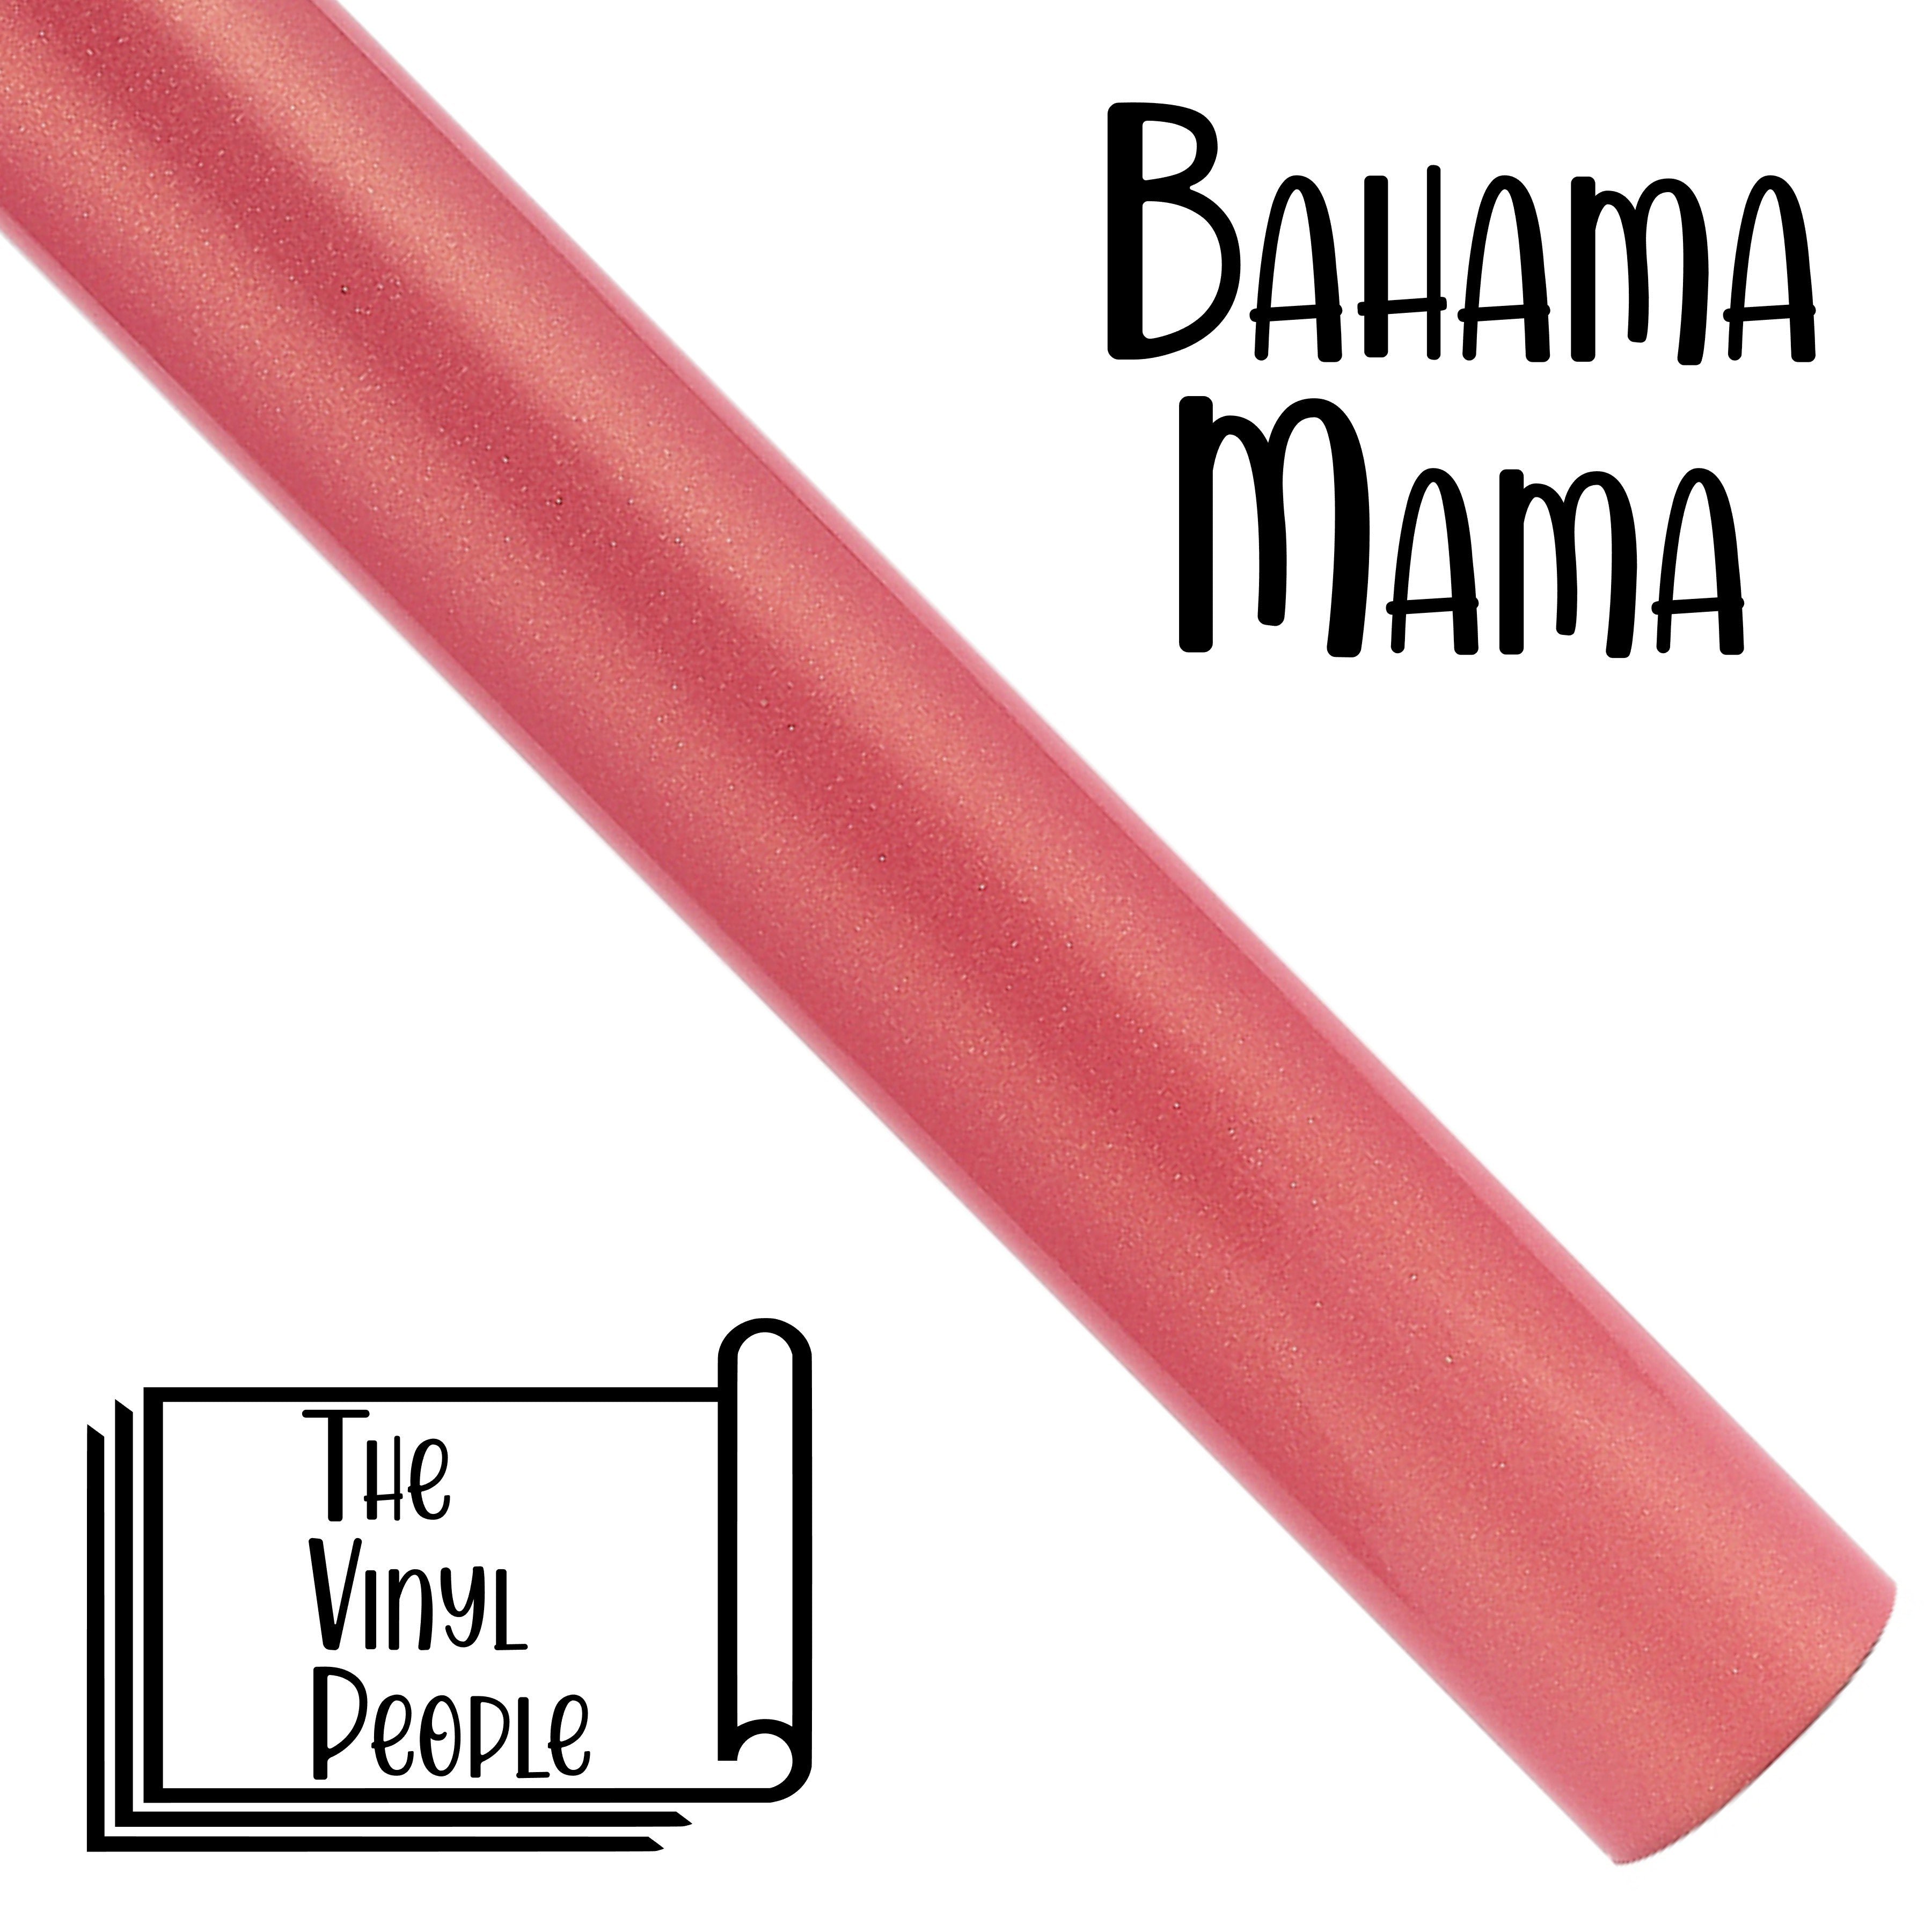 Bahama Mama - 12" x 24" roll